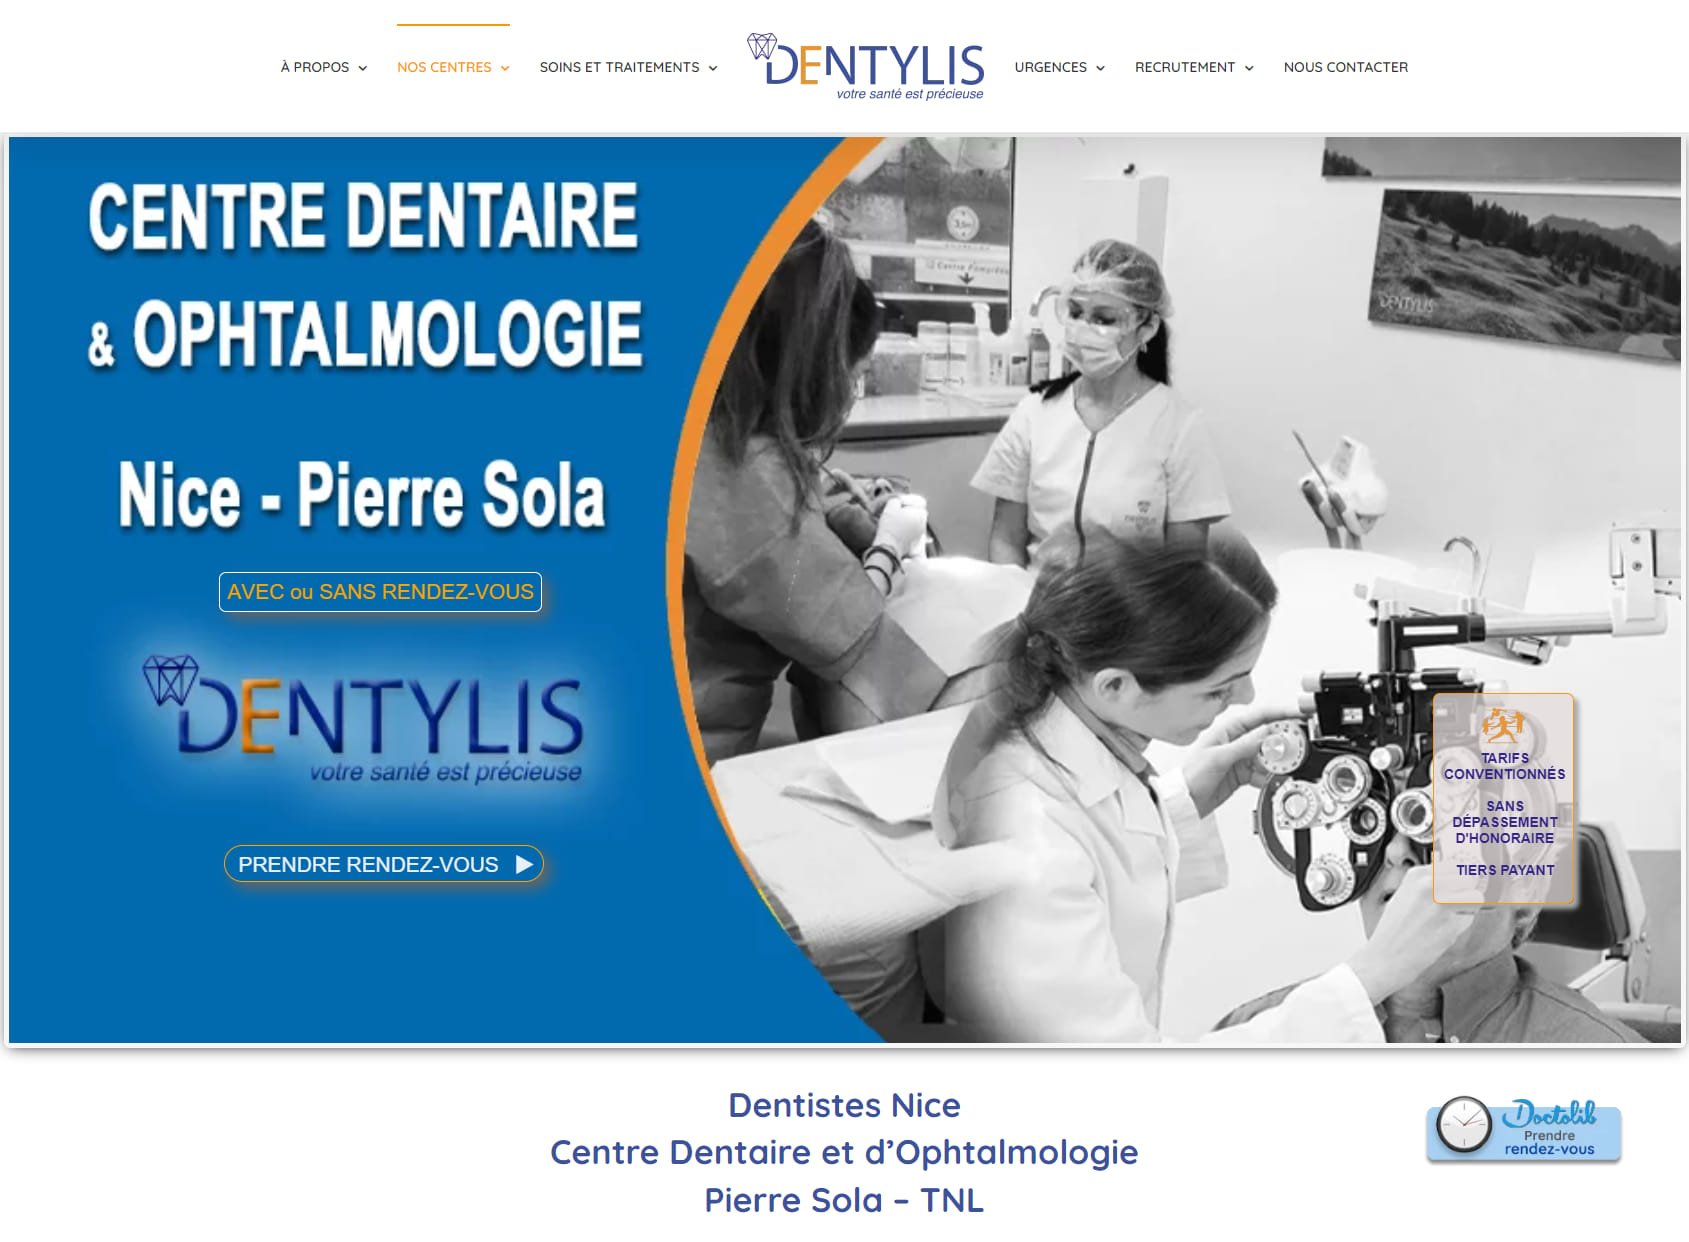 Centre Dentaire et Ophtalmologie Nice Pierre Sola : Dentistes & ophtalmologues - Dentylis